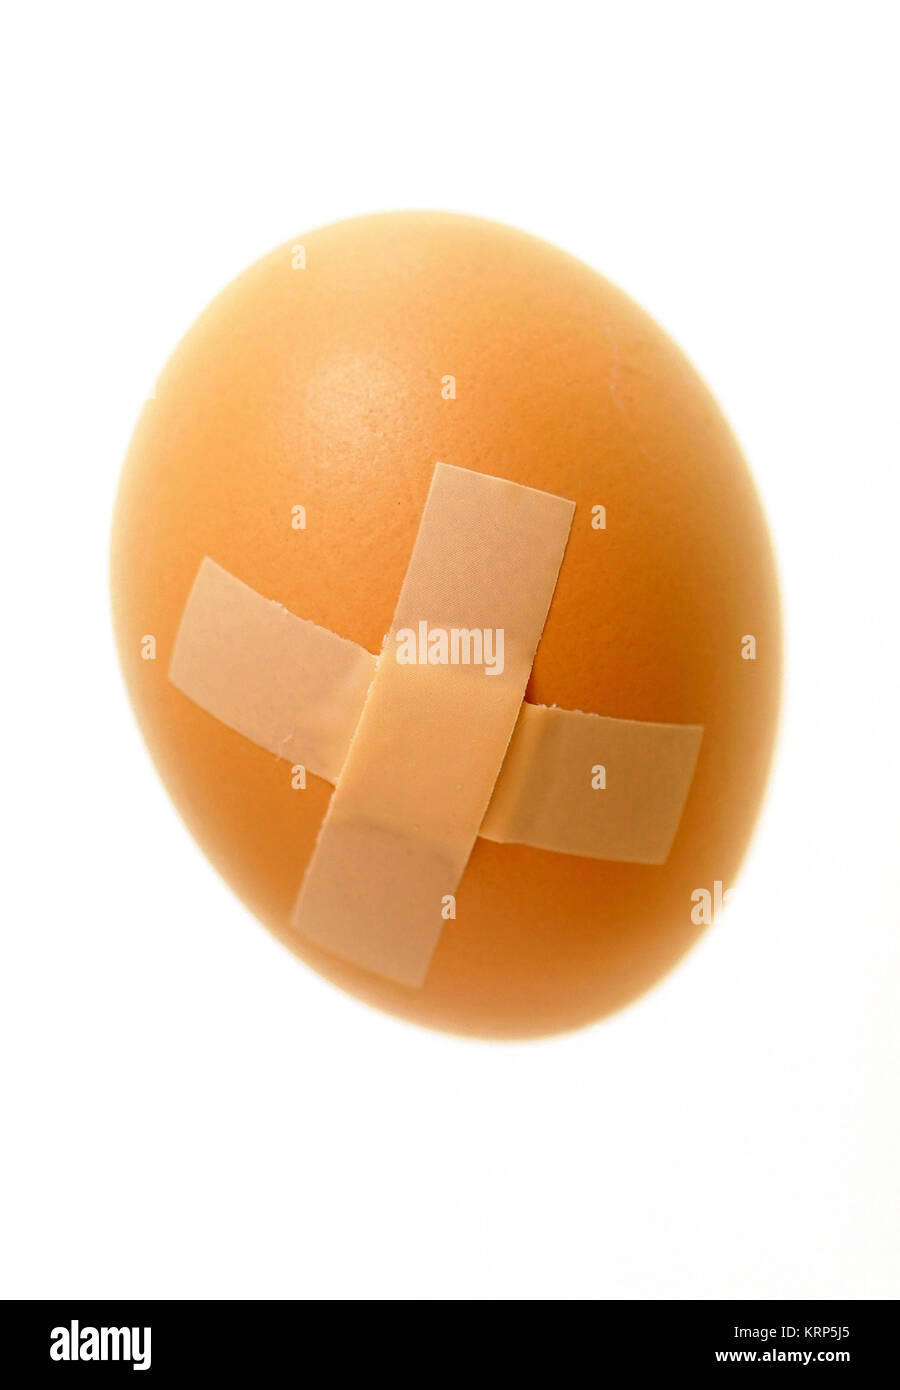 Ei mit Pflaster - egg with plaster Stock Photo